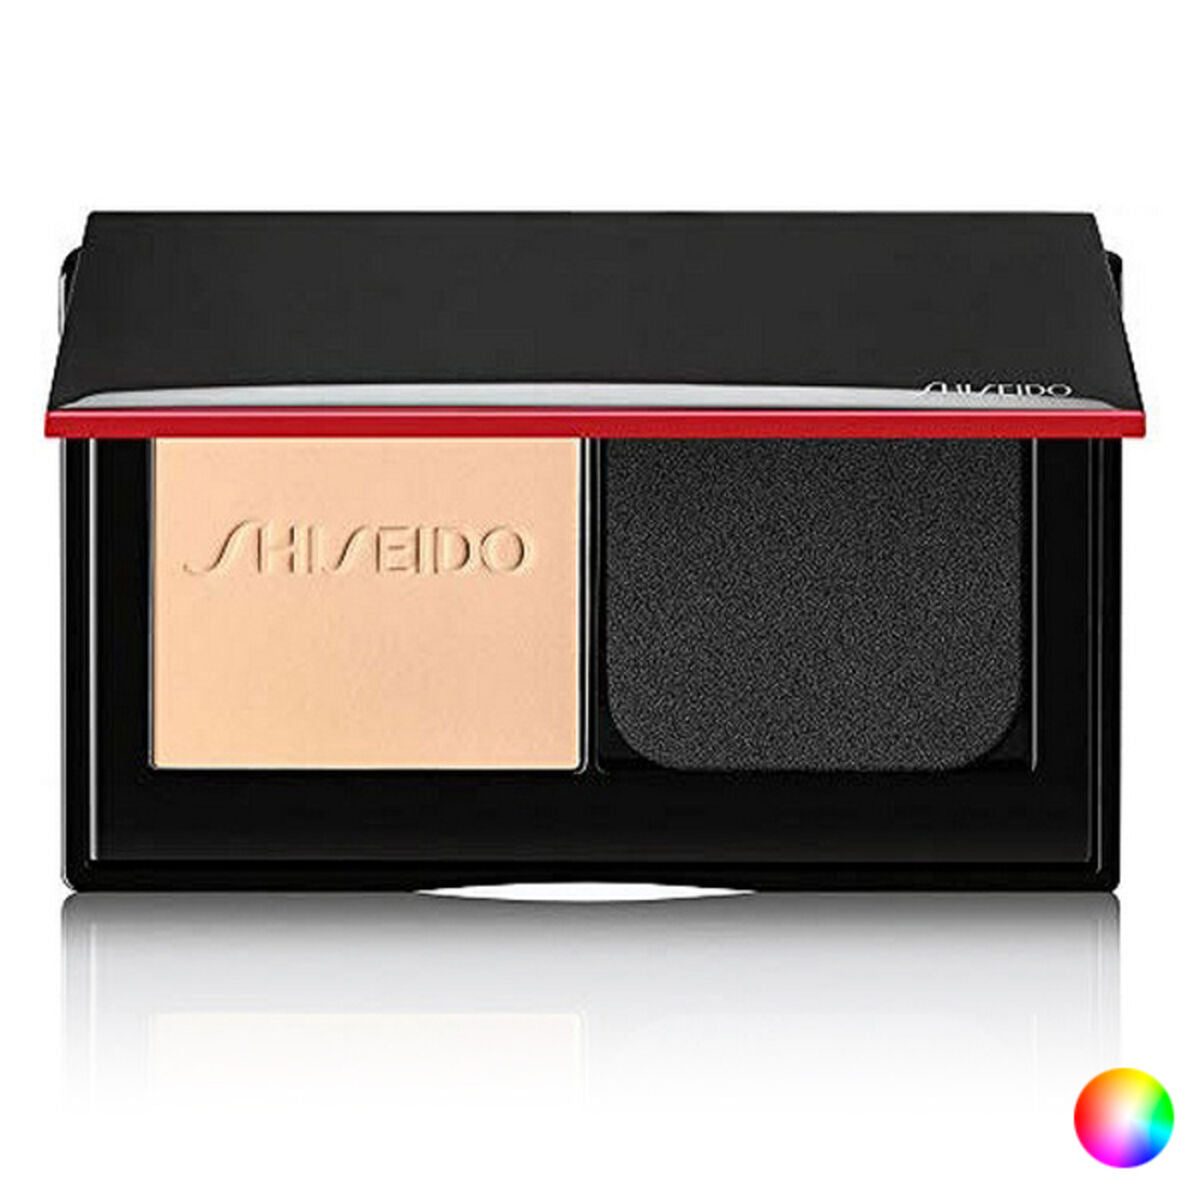 Basis für Puder-Makeup Synchro Skin Self-Refreshing Shiseido 50 ml - CA International 